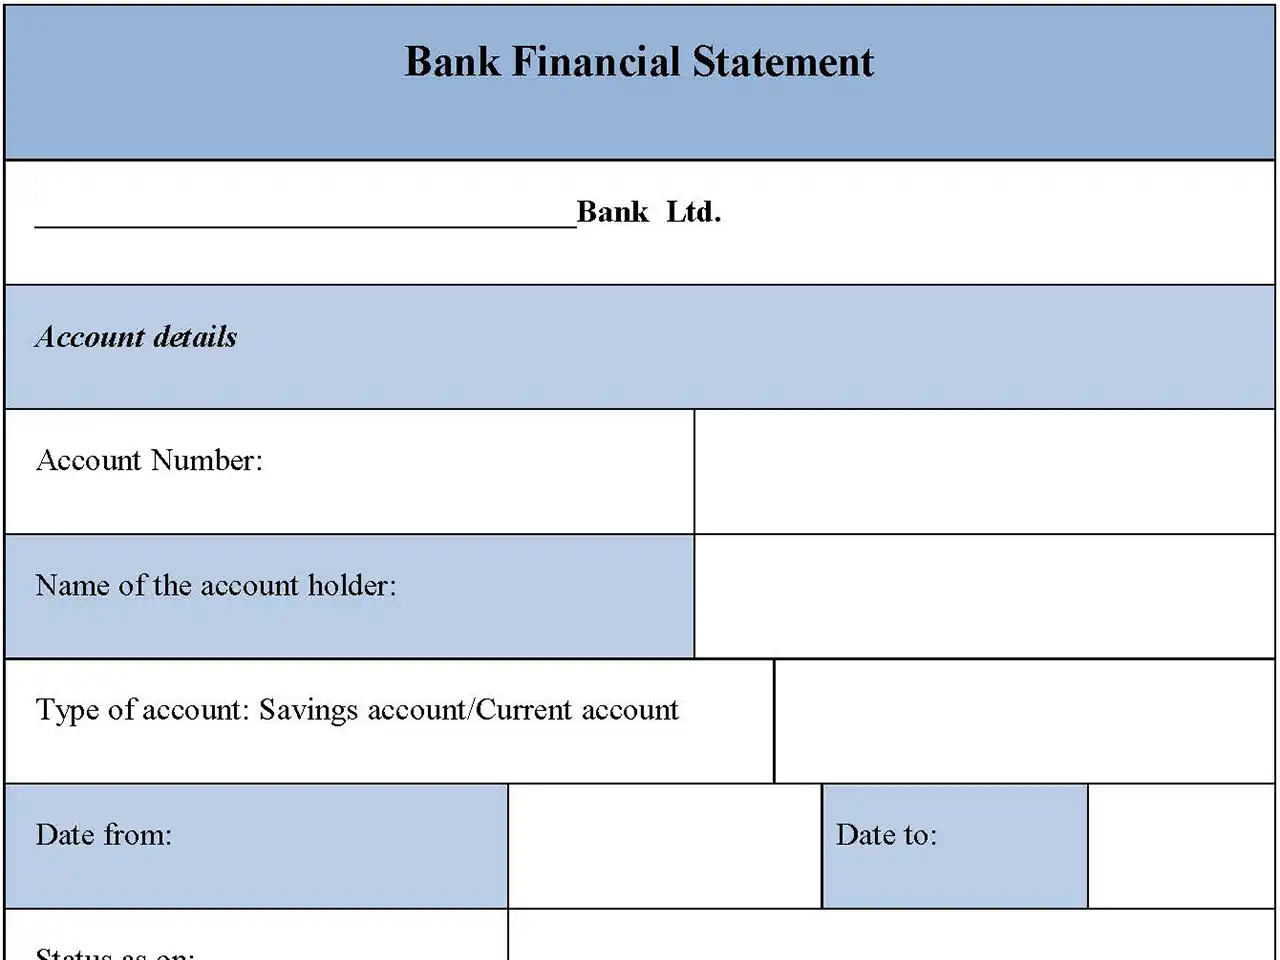 Bank Financial Statement Form